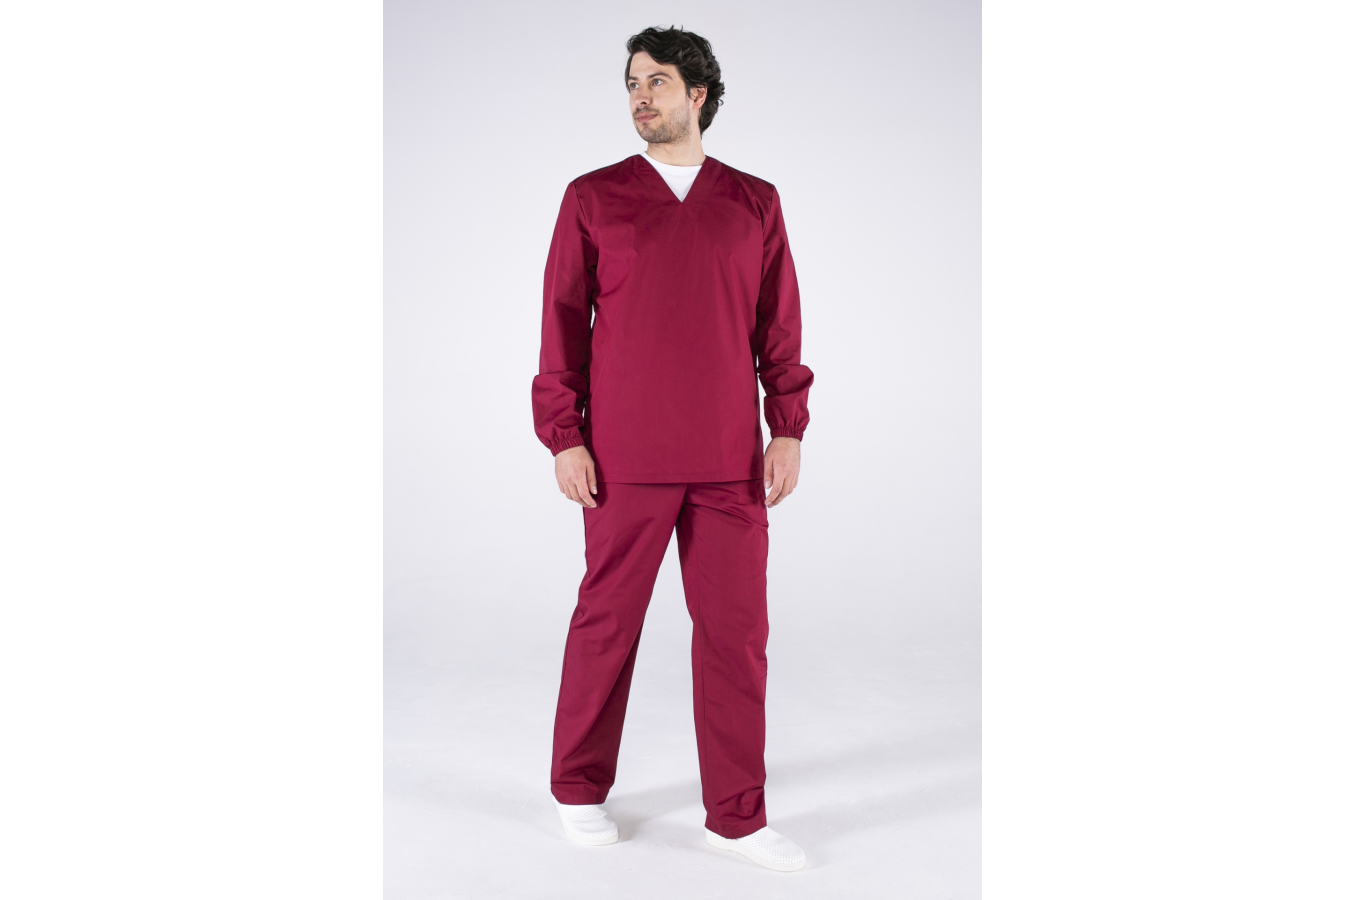 Мужской костюм ХАССП-База (ткань ТиСи, 120), бордовый